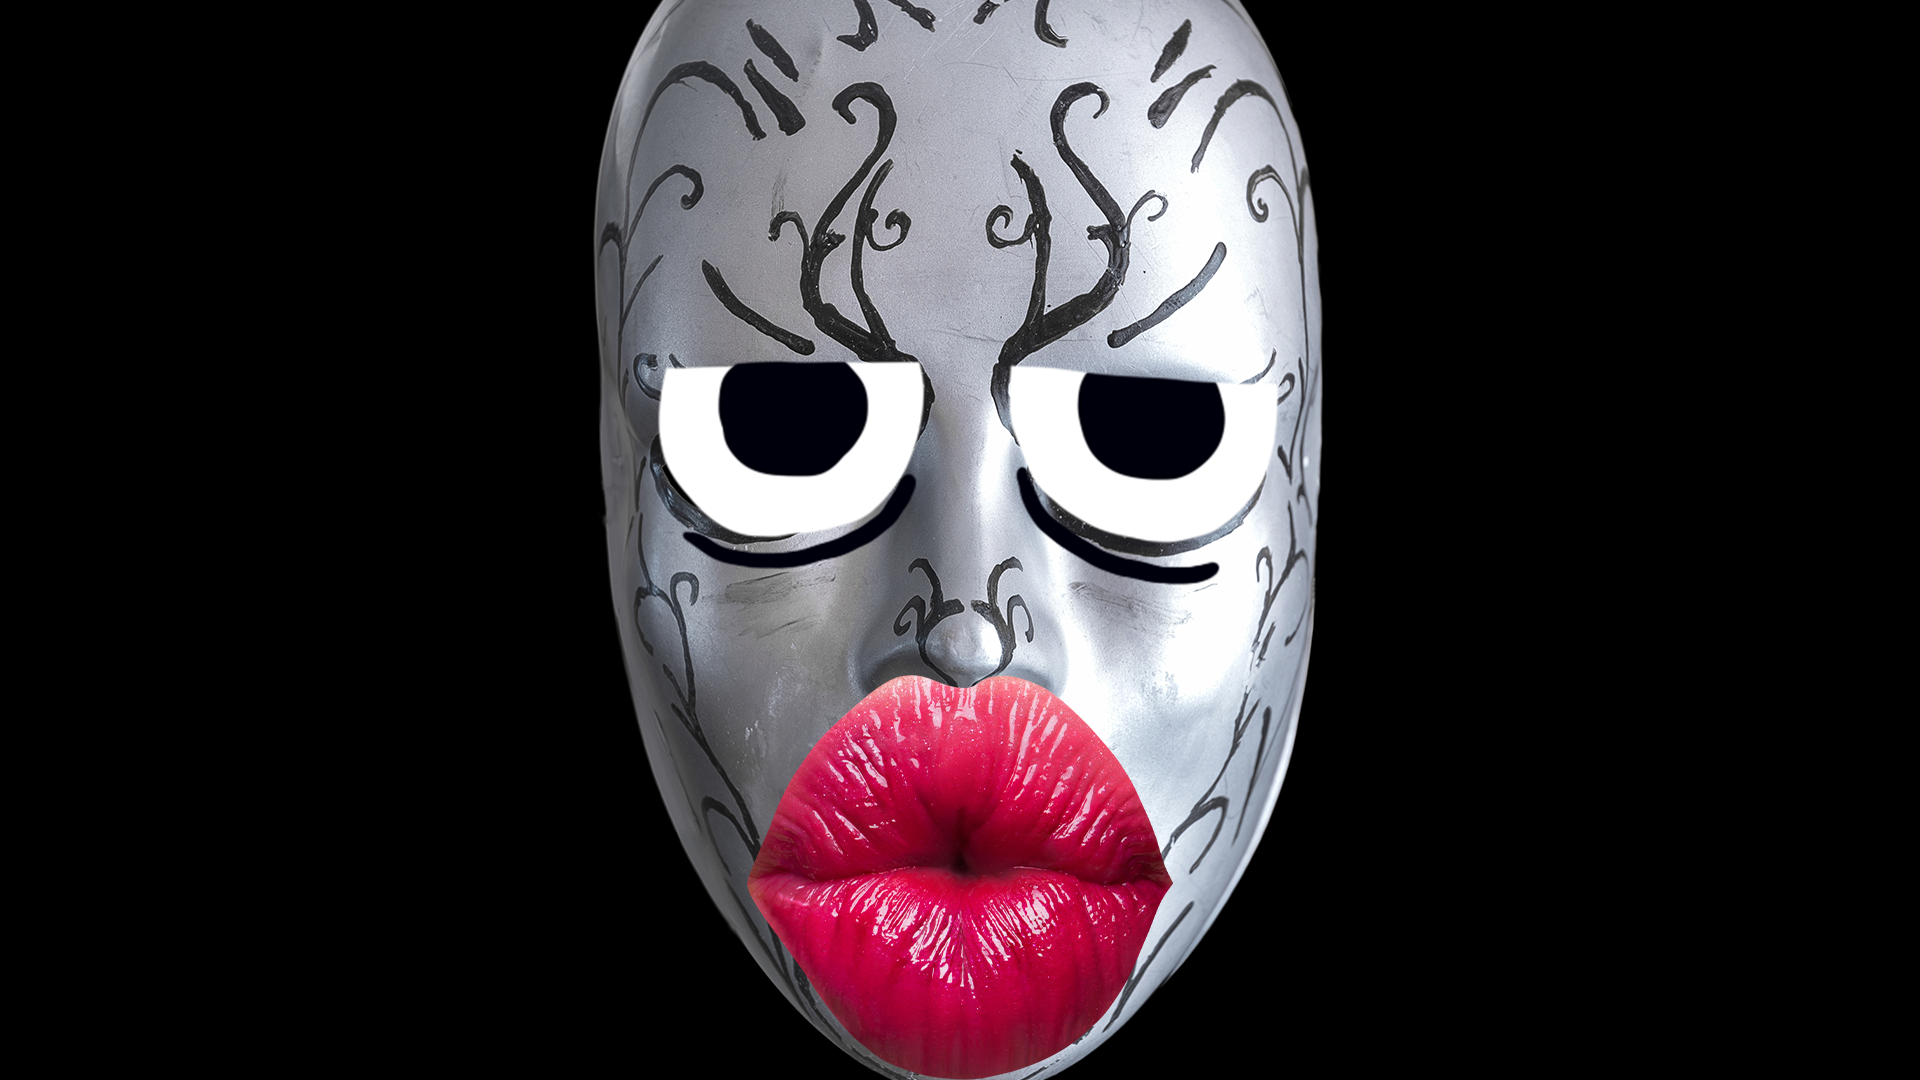 Creepy mask making a kissy face